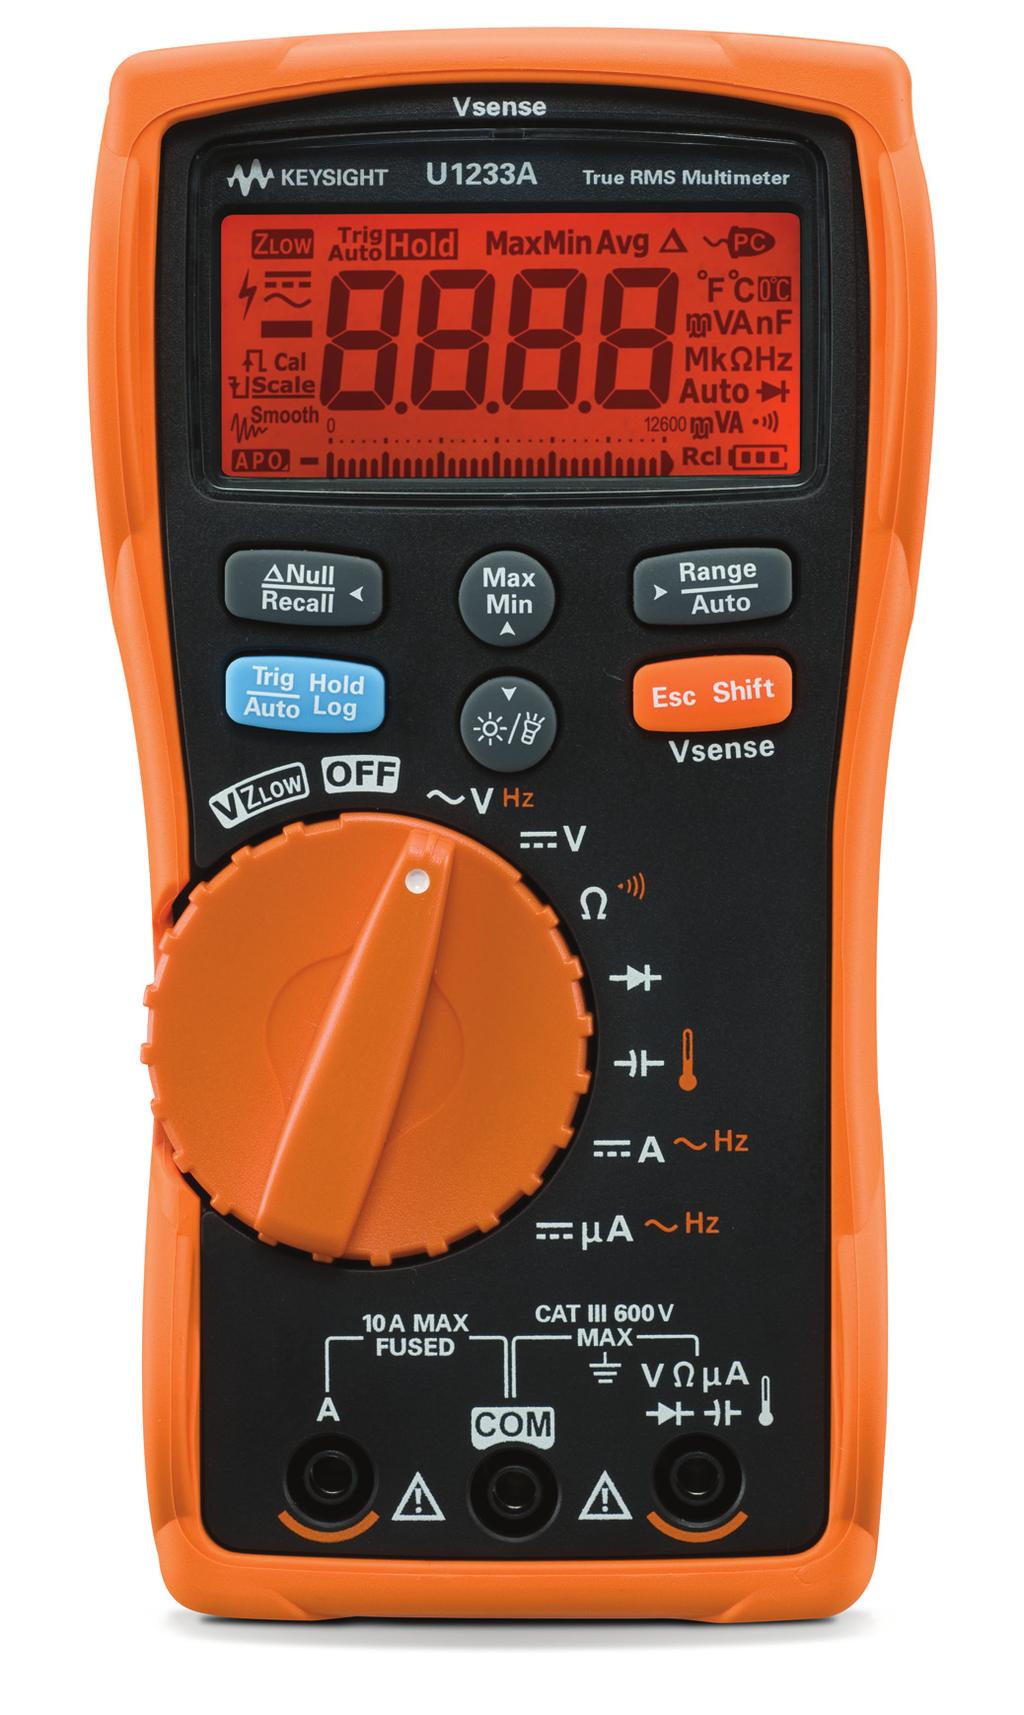 04 Keysight U1230 Series Handheld Digital Multimeters (DMMs) - Data Sheet Take a Closer Look Flashing light and audible beep during presence of voltage 1 Bar